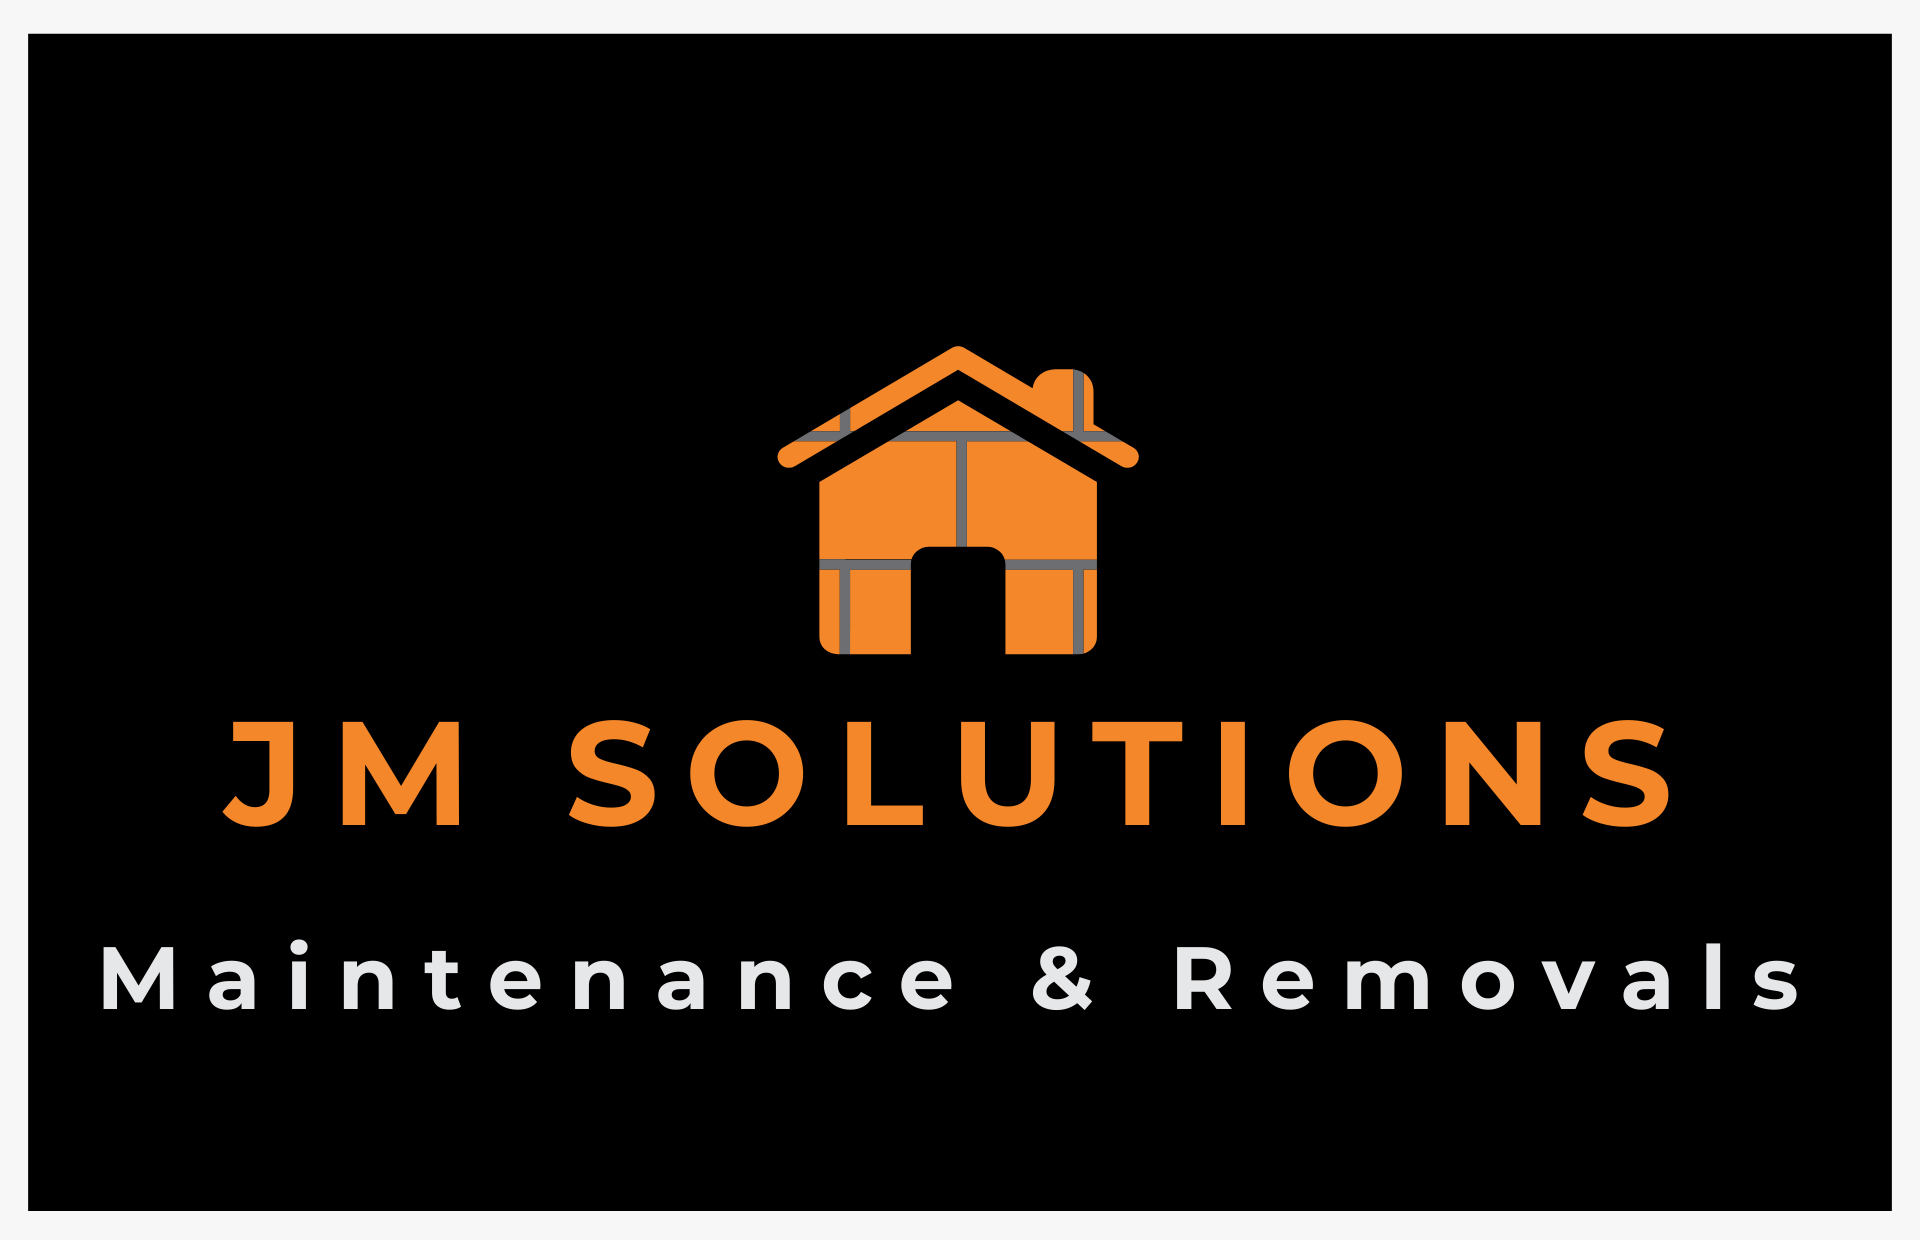 JM Solutions logo